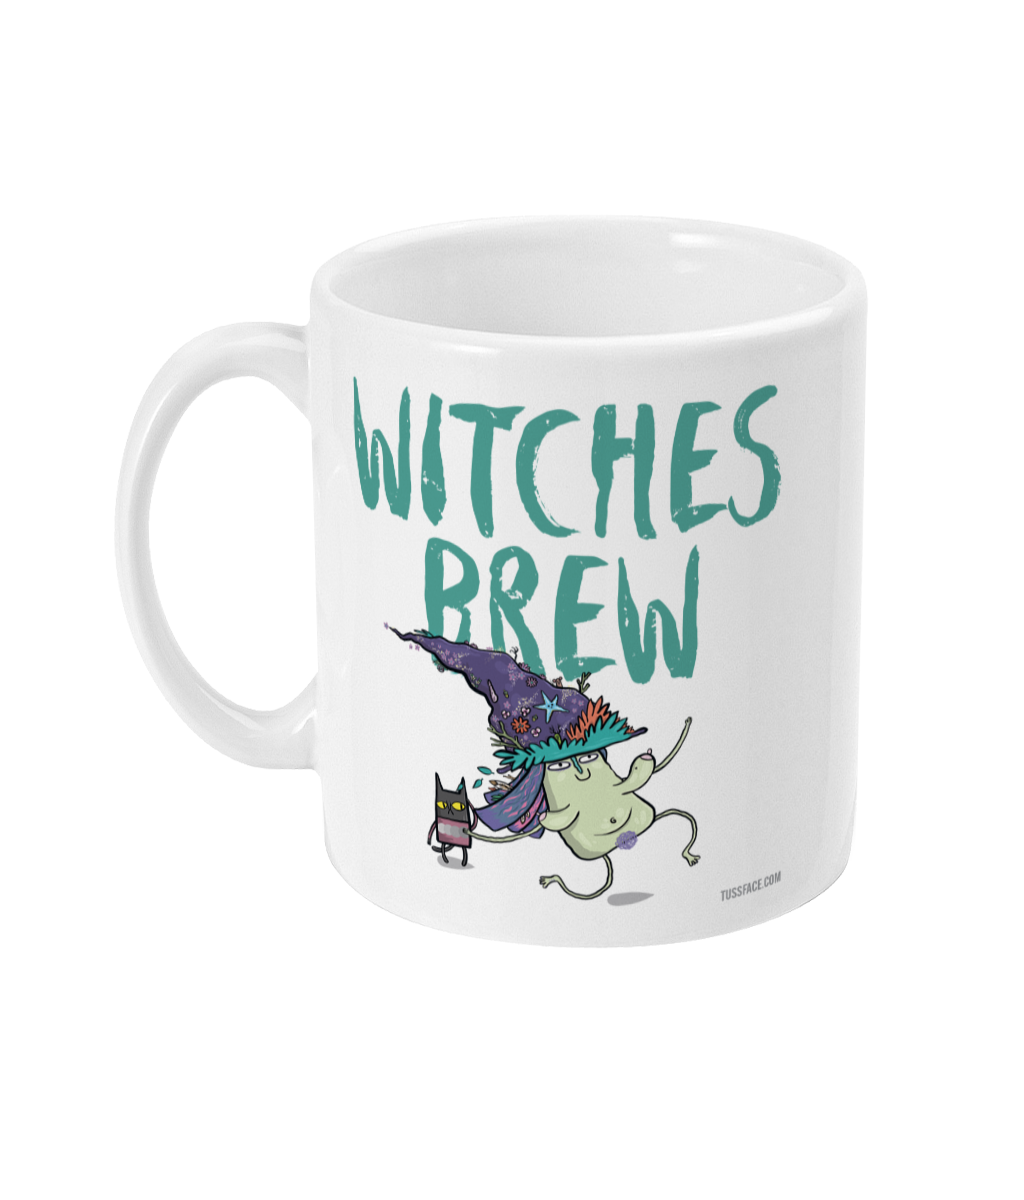 Witches Brew / Brag gwragh - TussFace Mug